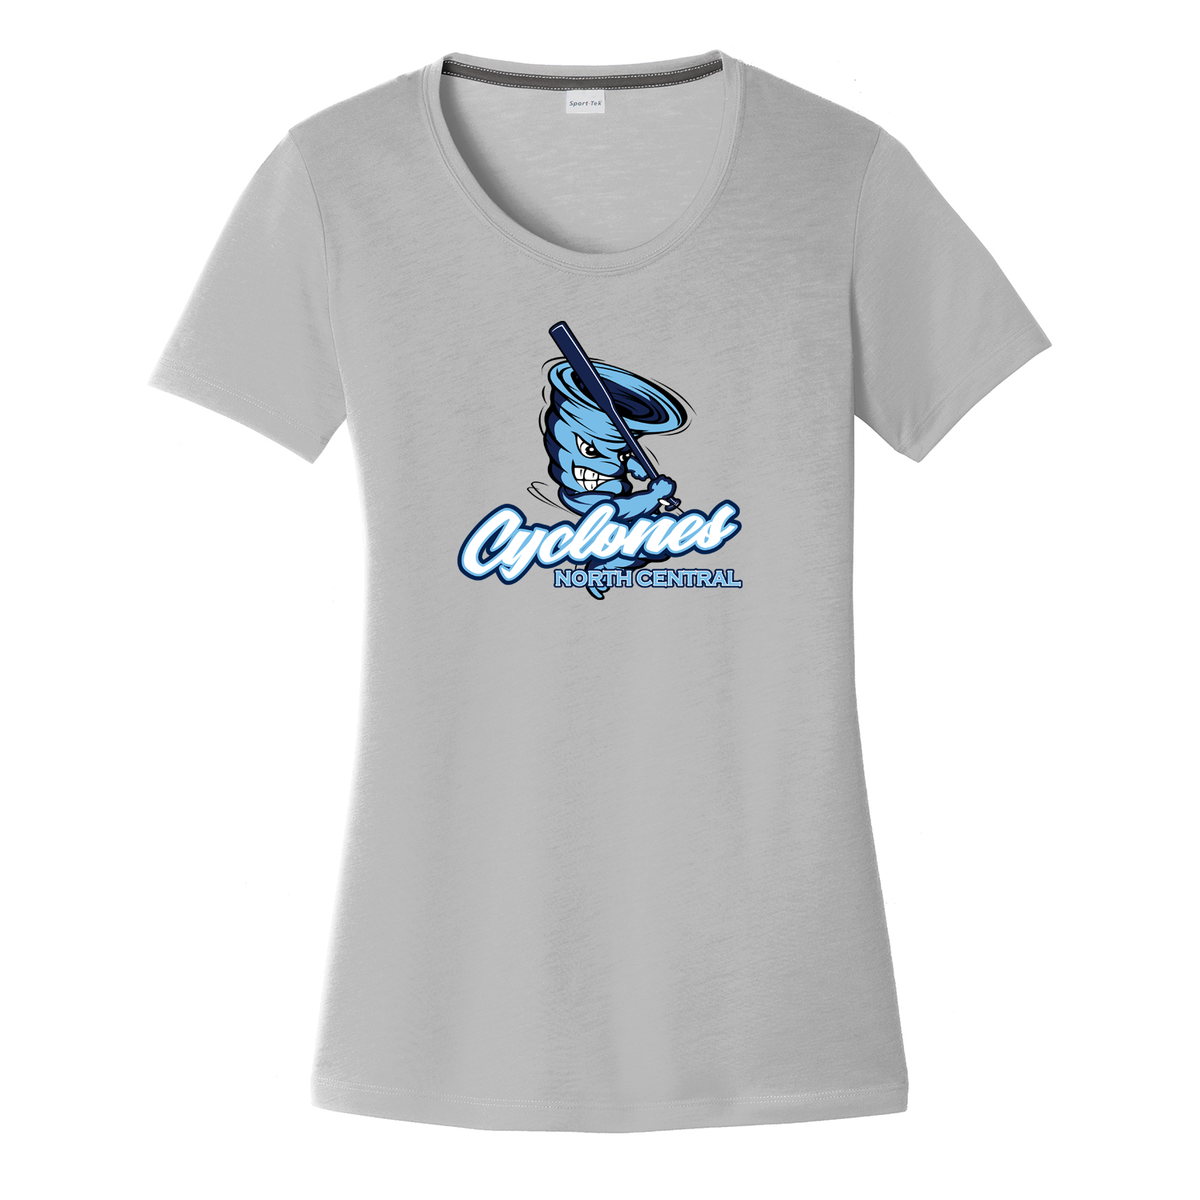 Cyclones Baseball Women's CottonTouch Performance T-Shirt